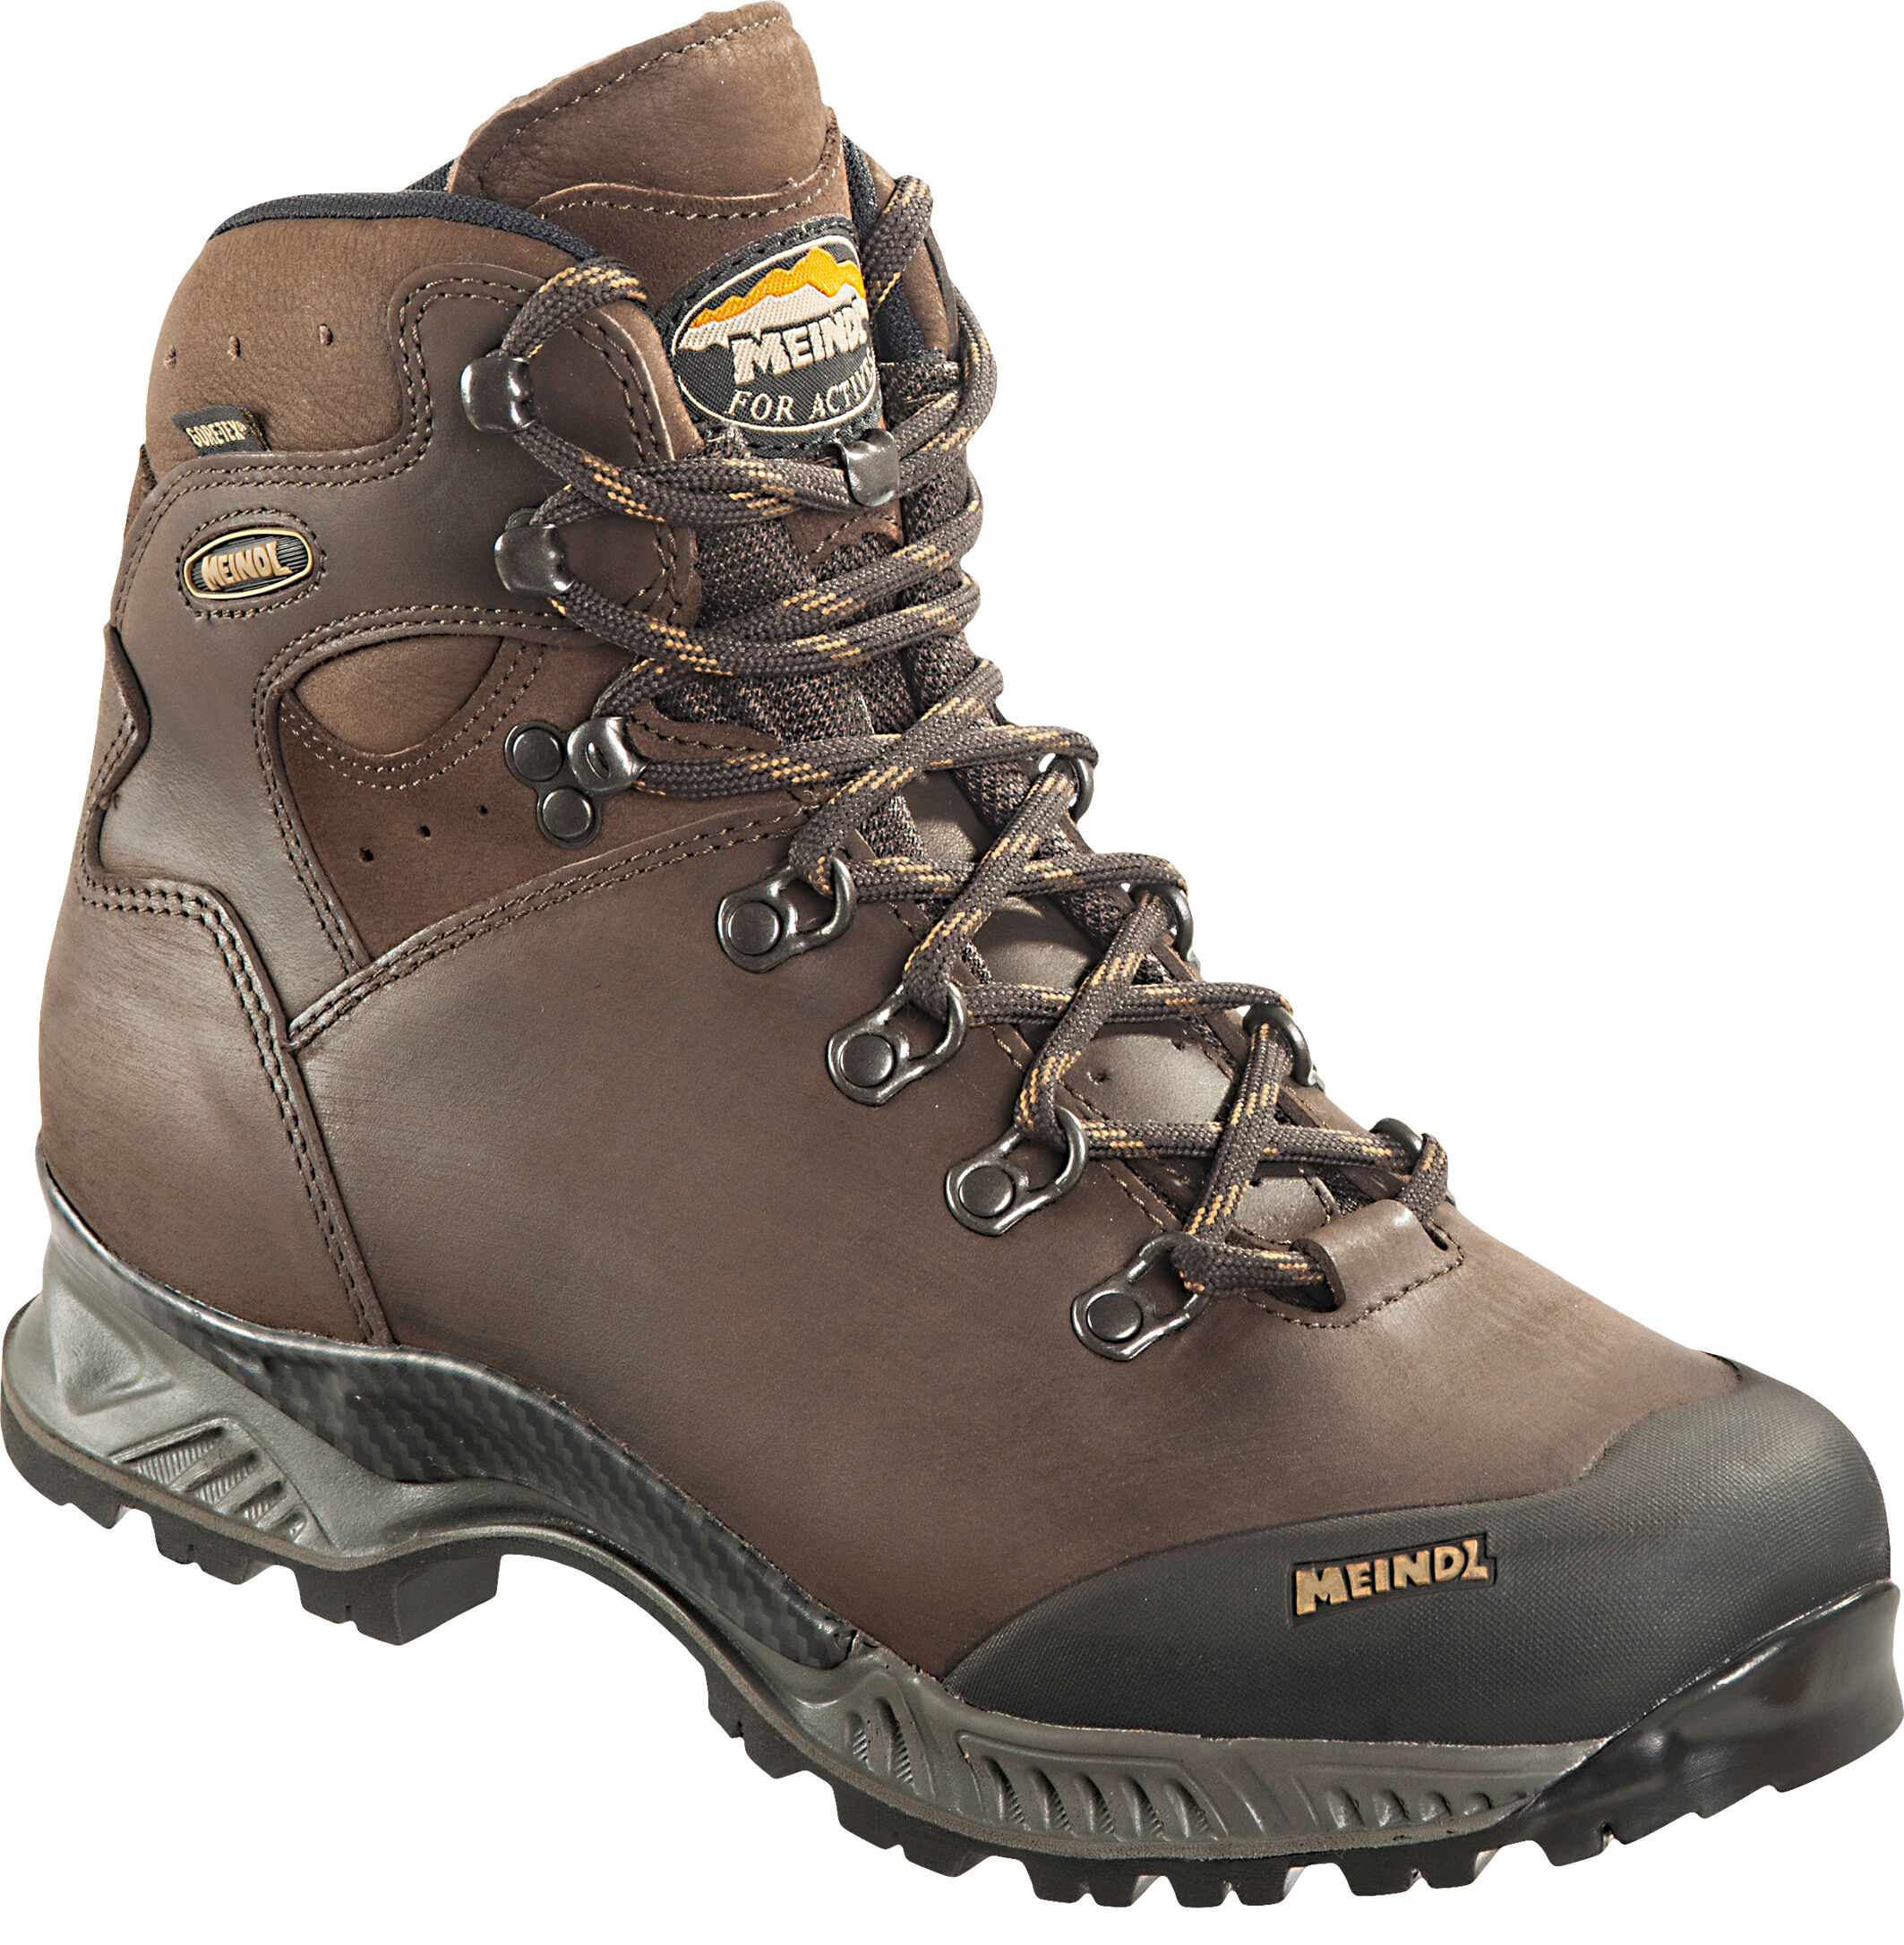 Meindl - Softline TOP GTX® - Hiking Boots - Men's